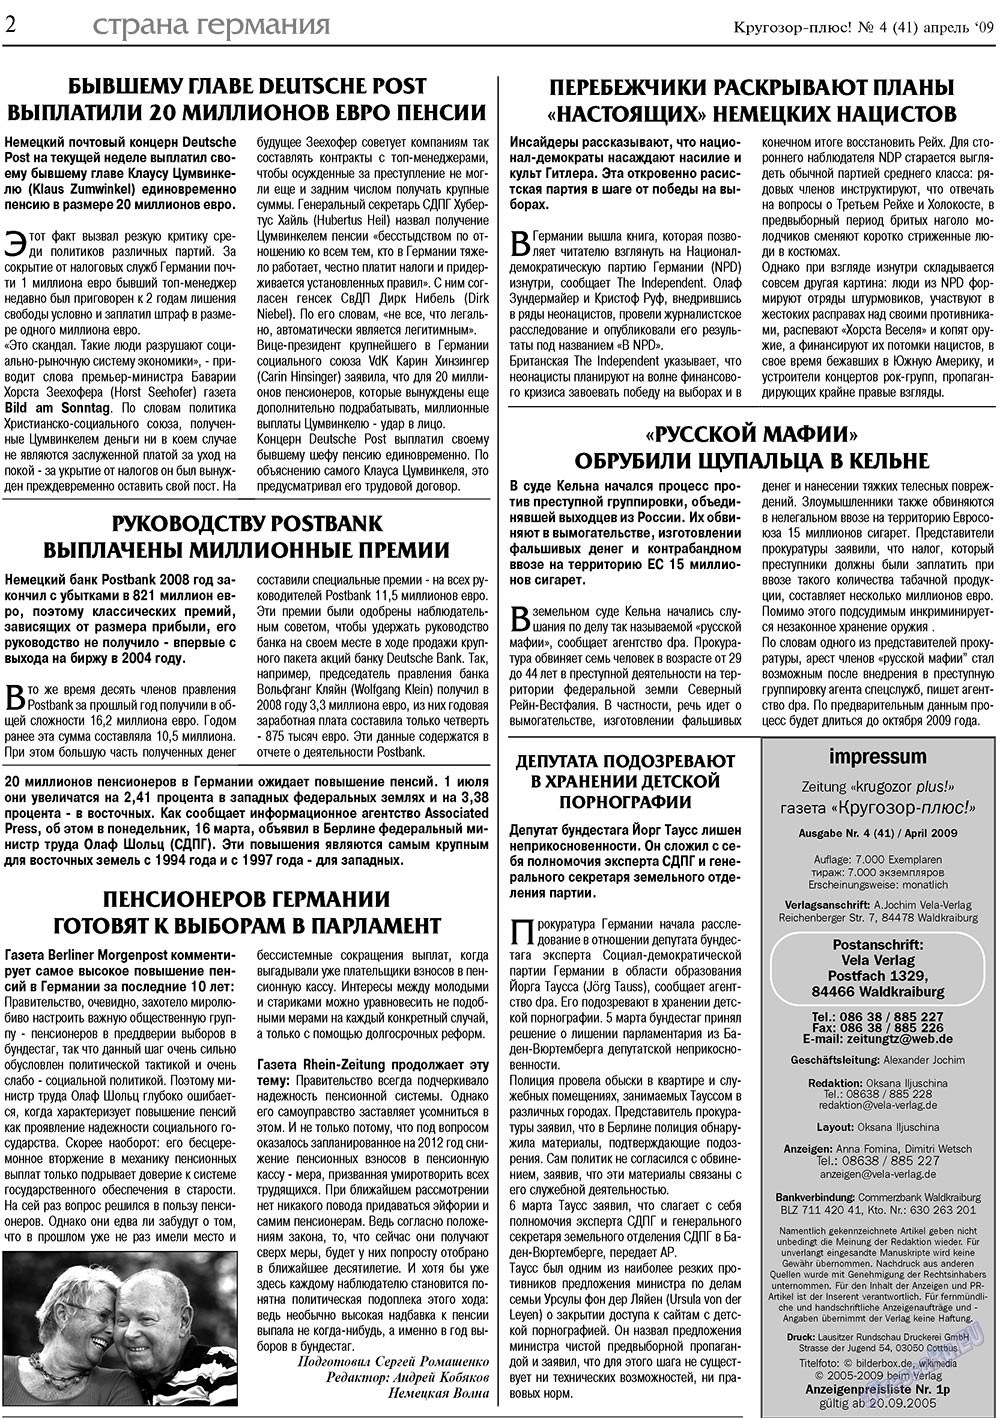 Кругозор плюс! (газета). 2009 год, номер 4, стр. 2